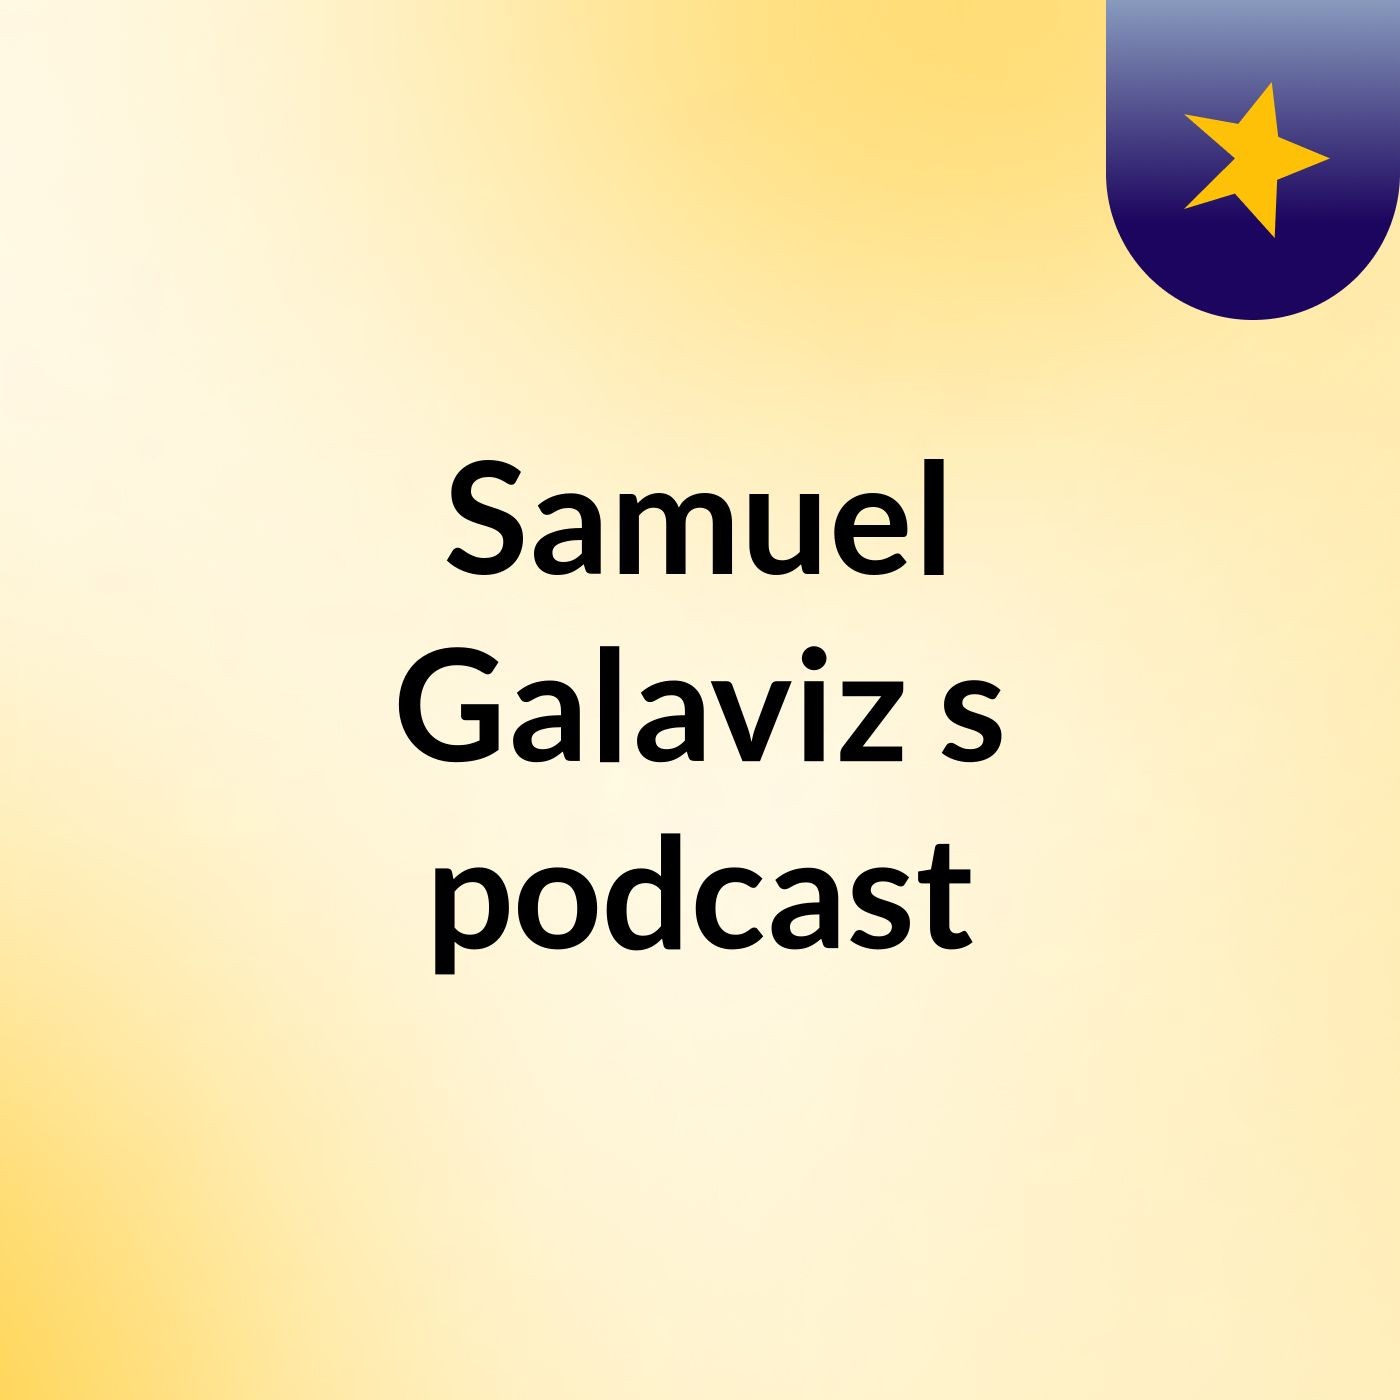 Samuel Galaviz's podcast